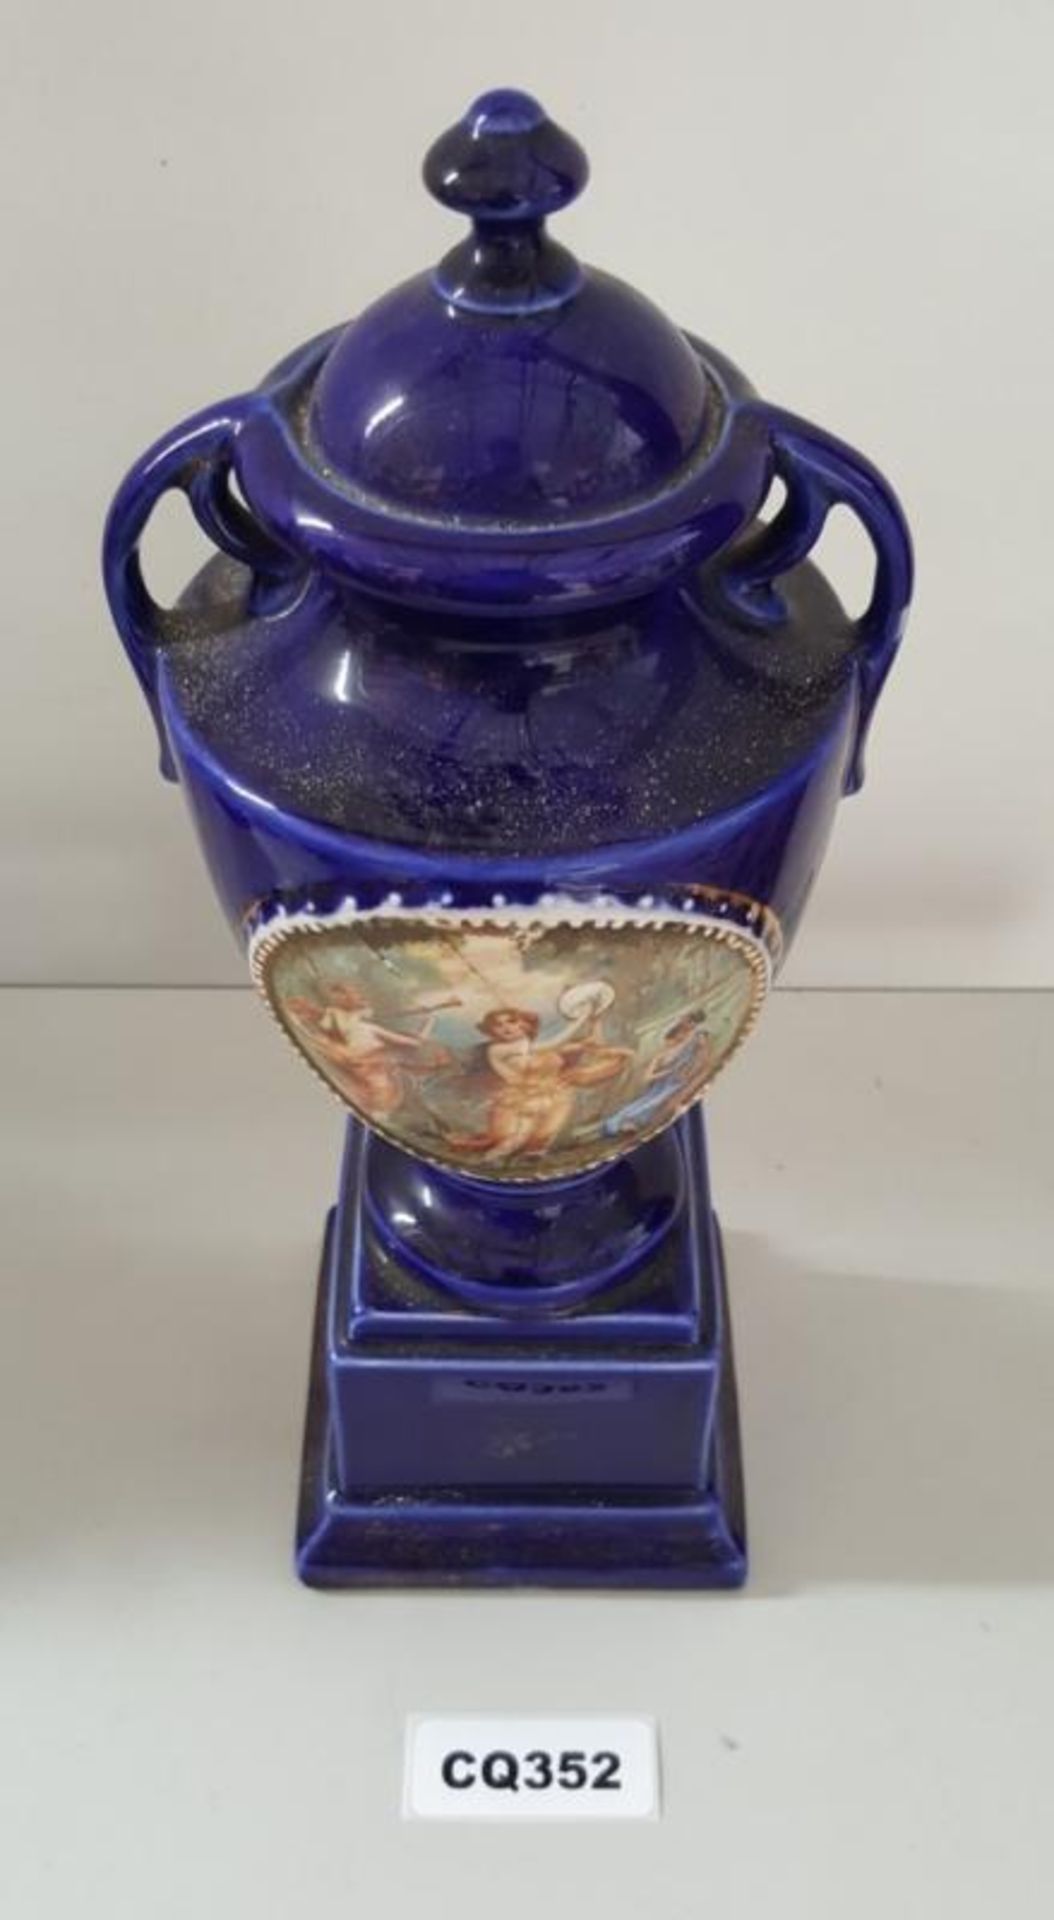 1 x Empire Stoke On Trent Blue Porcelain Trophy Shapped Ornament - Ref CQ352 E - Dimensions:H30/L11c - Image 3 of 4